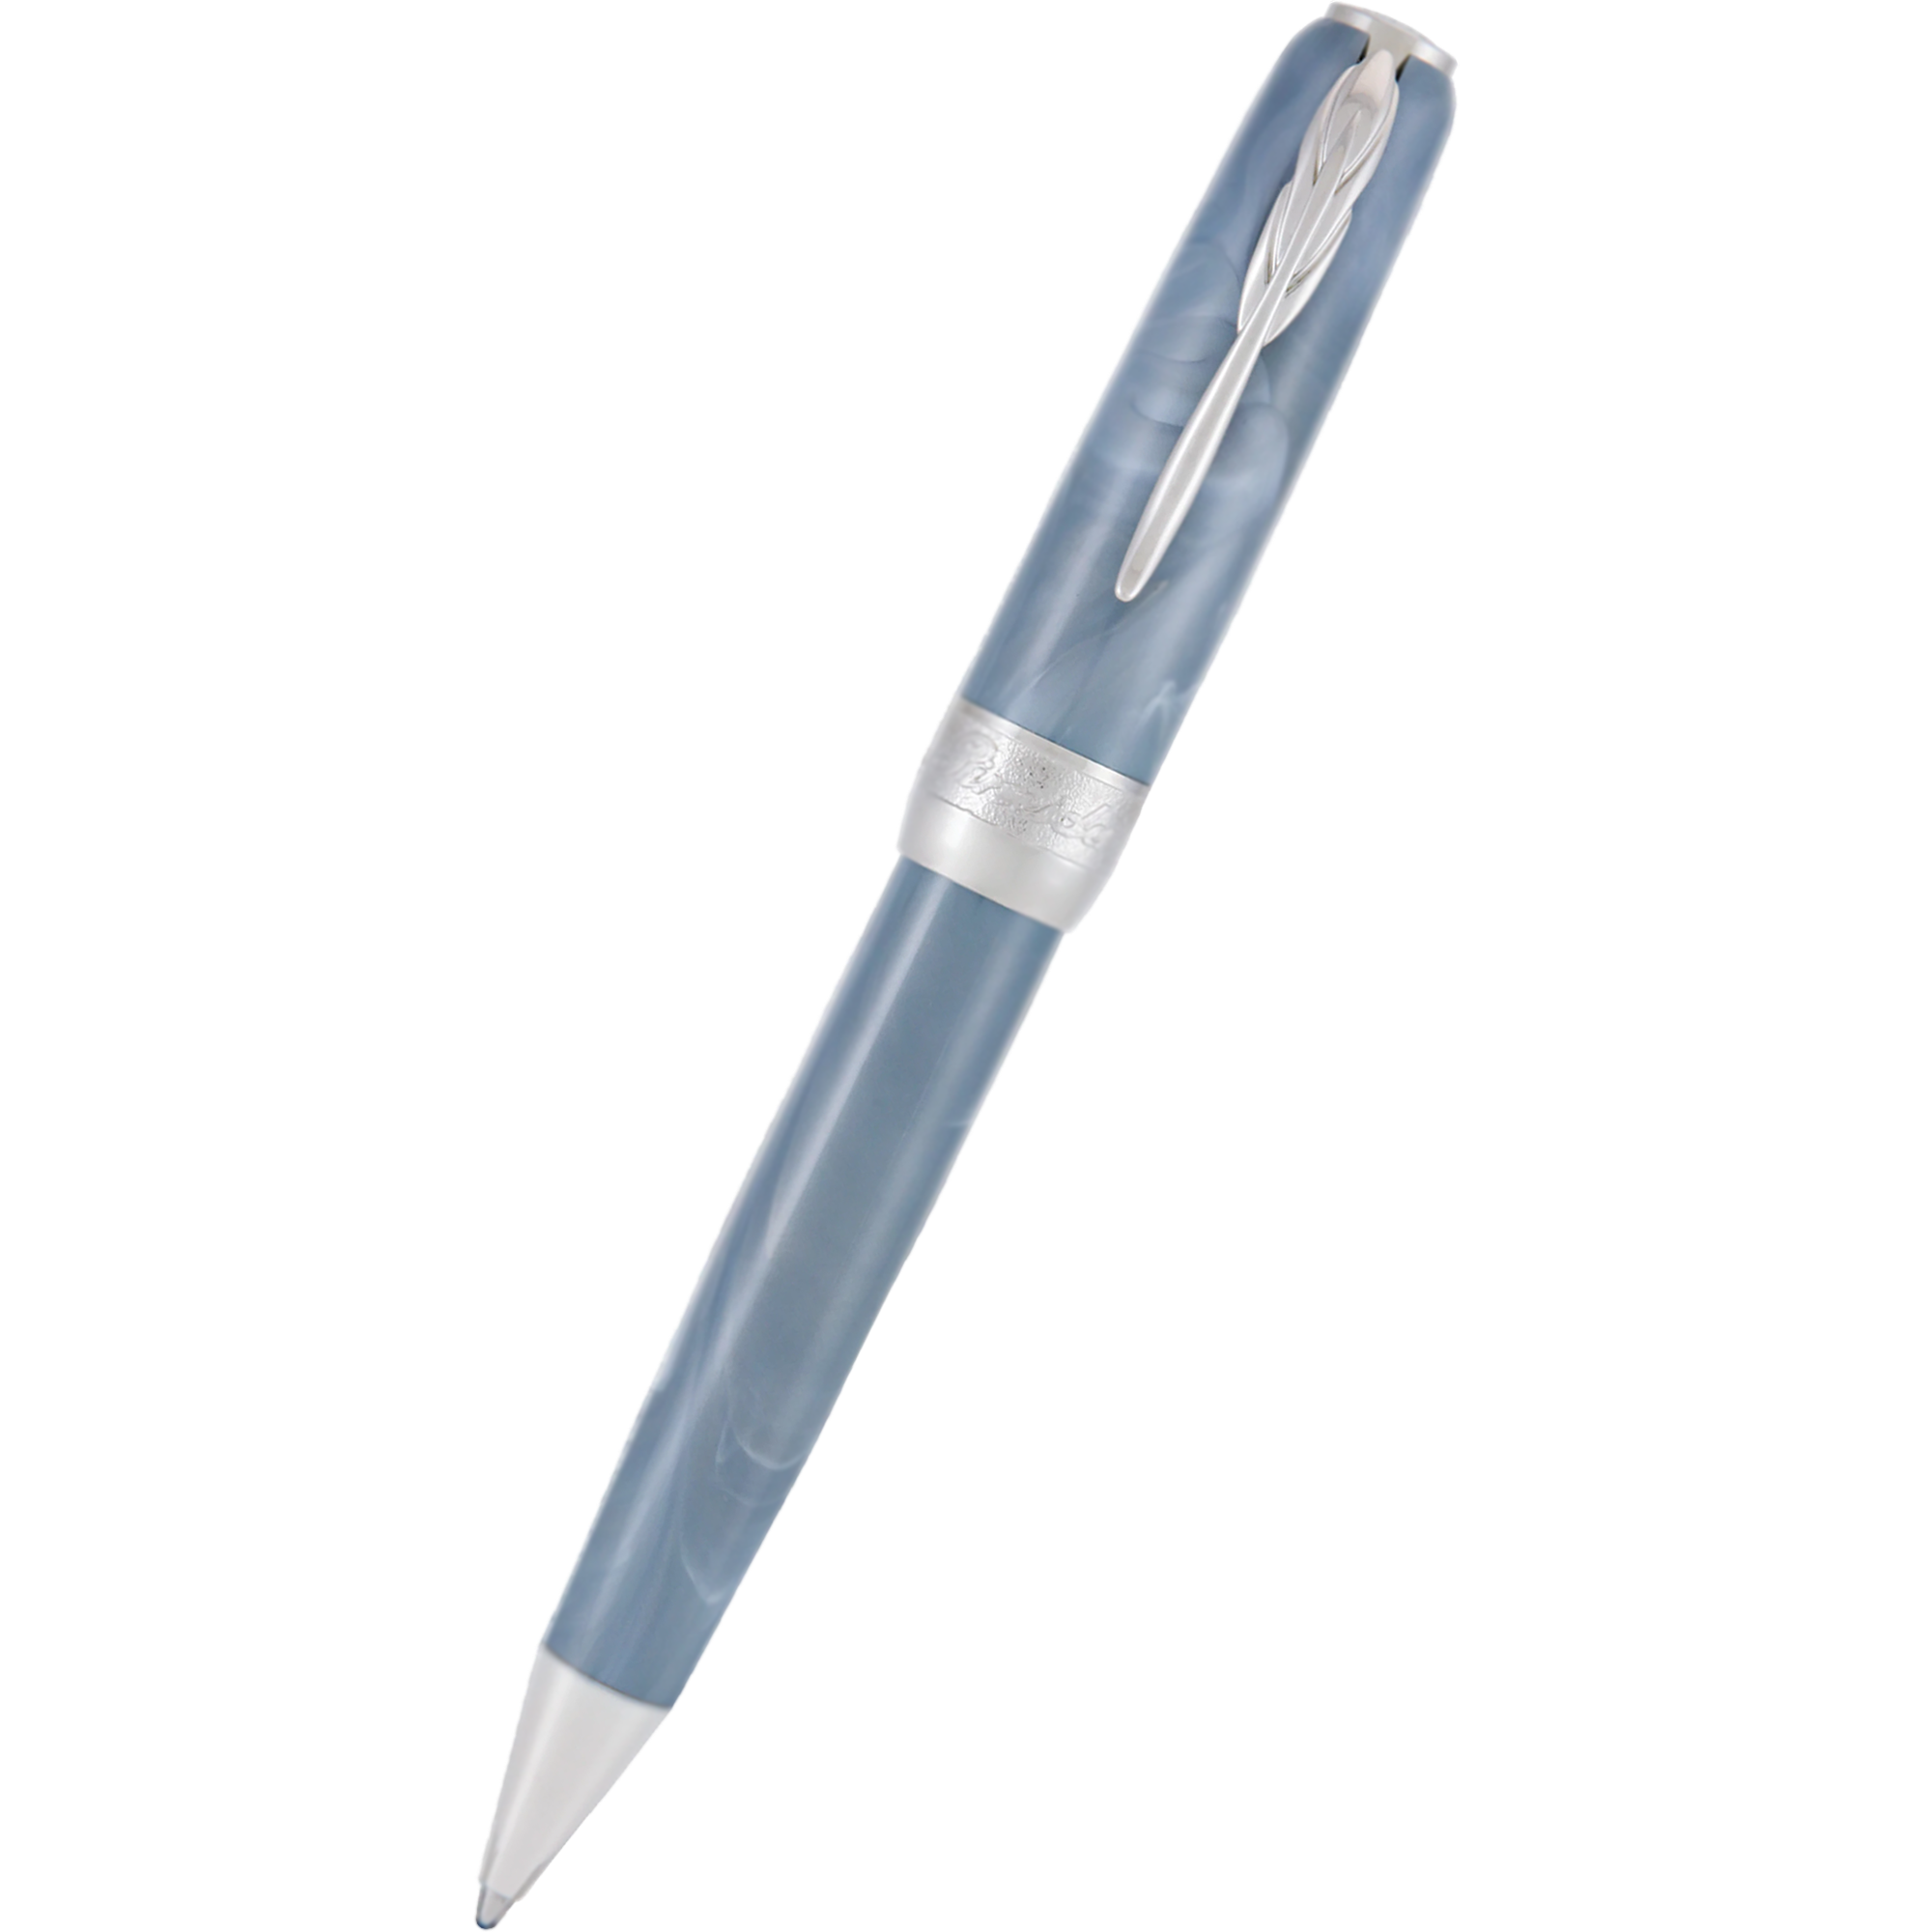 Pineider Full Metal Jacket Ballpoint Pen - Ash Grey-Pen Boutique Ltd